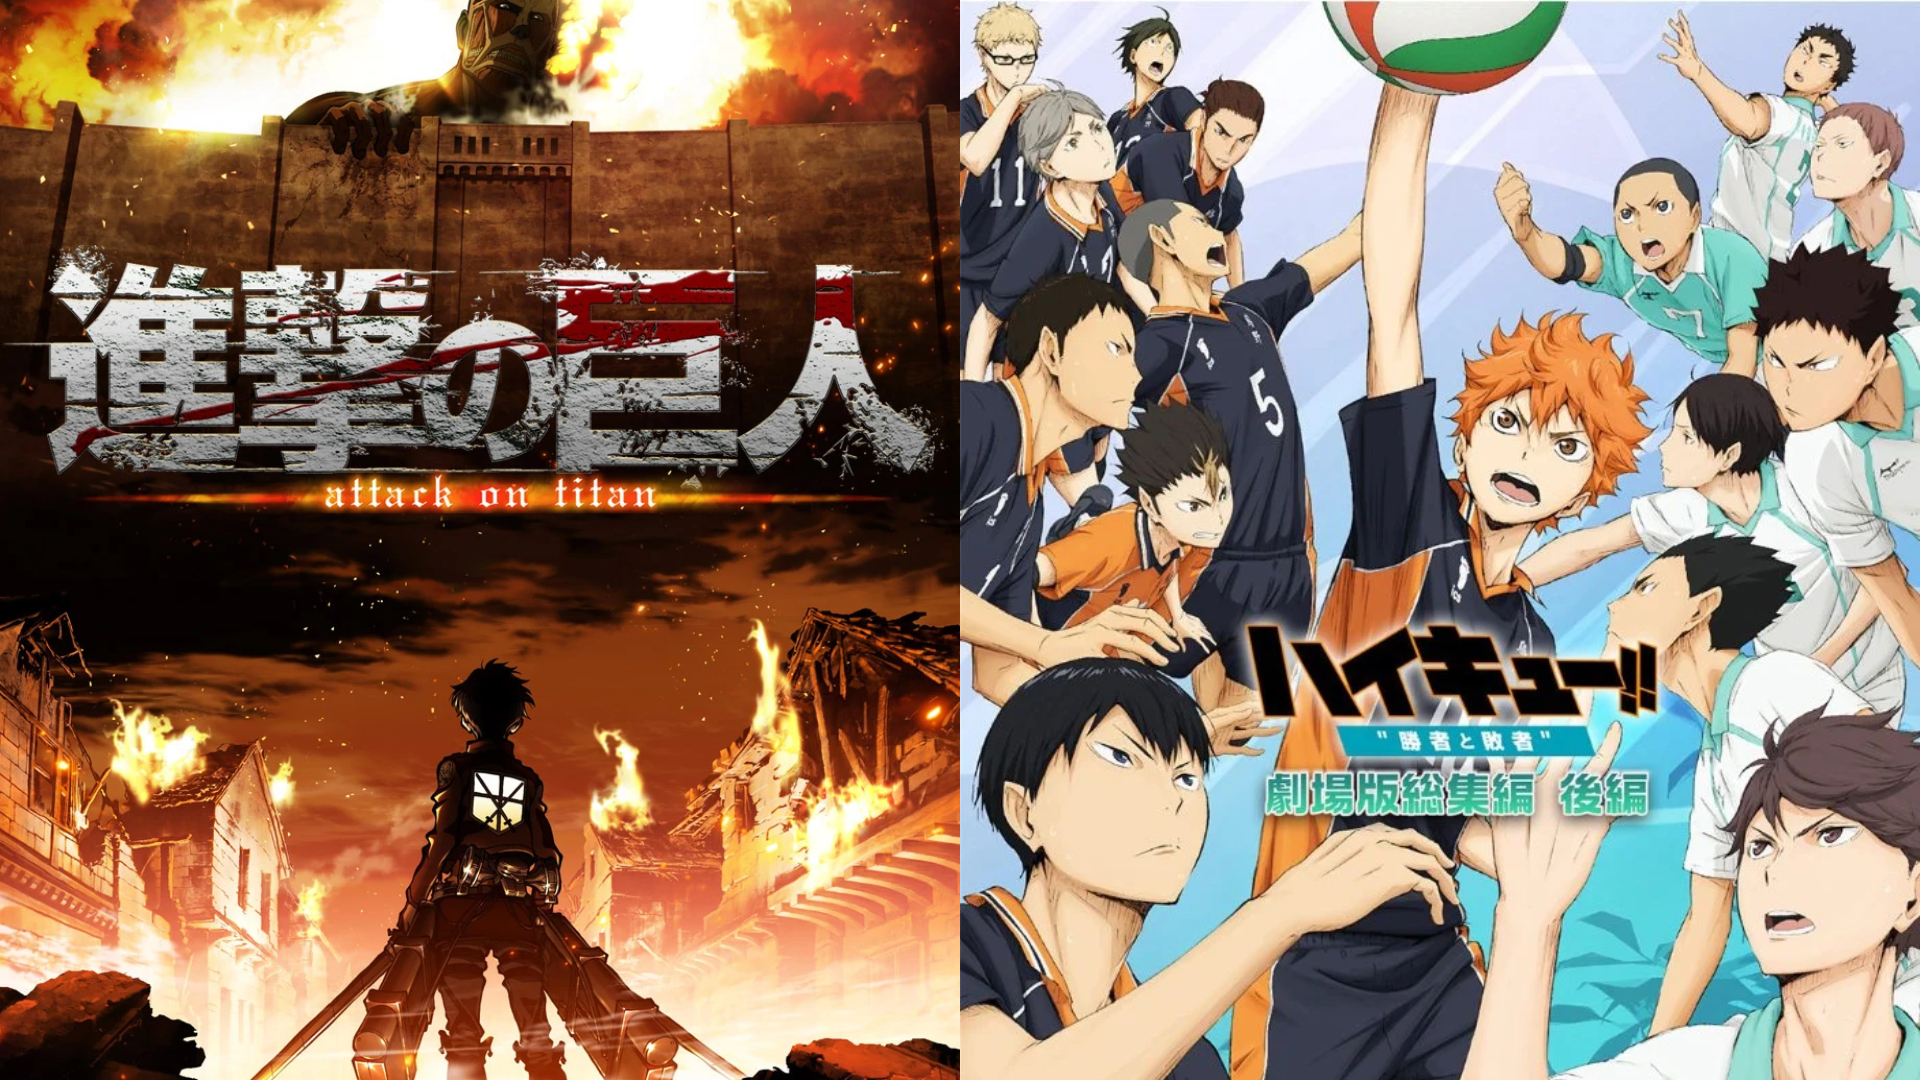 Haikyu!! Anime Gets 2-Episode Original Video Anime for Tokyo